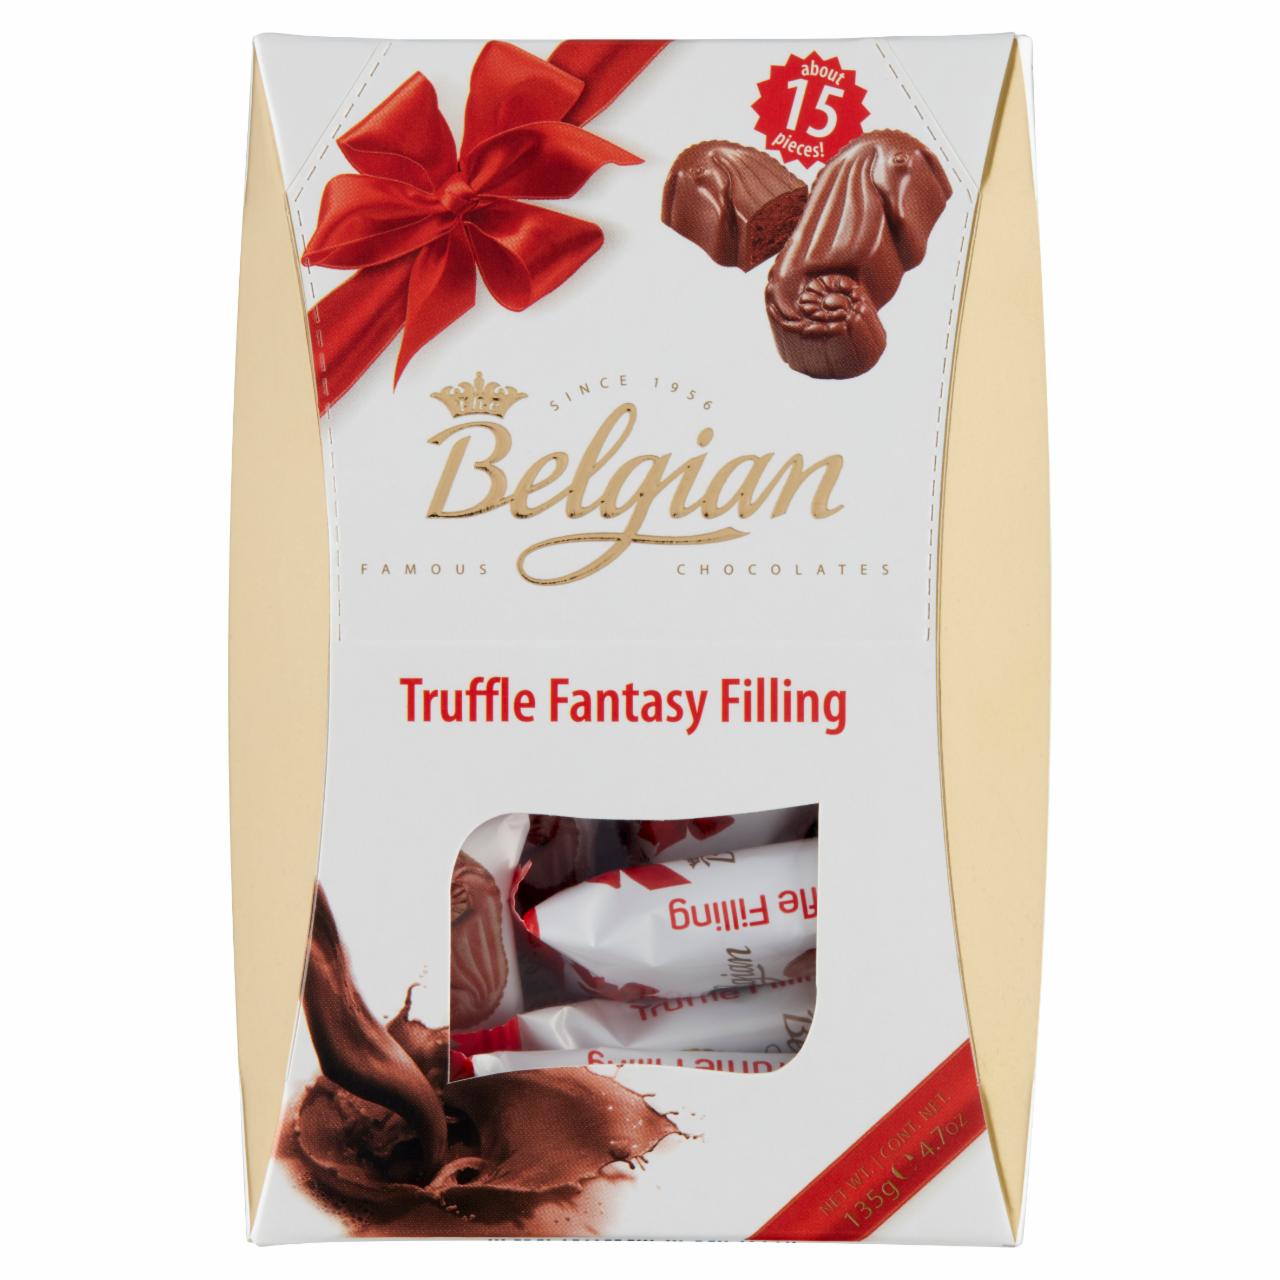 Képek - The Belgian Chocolate Seahorses Truffle belga csokoládé praliné 135 g